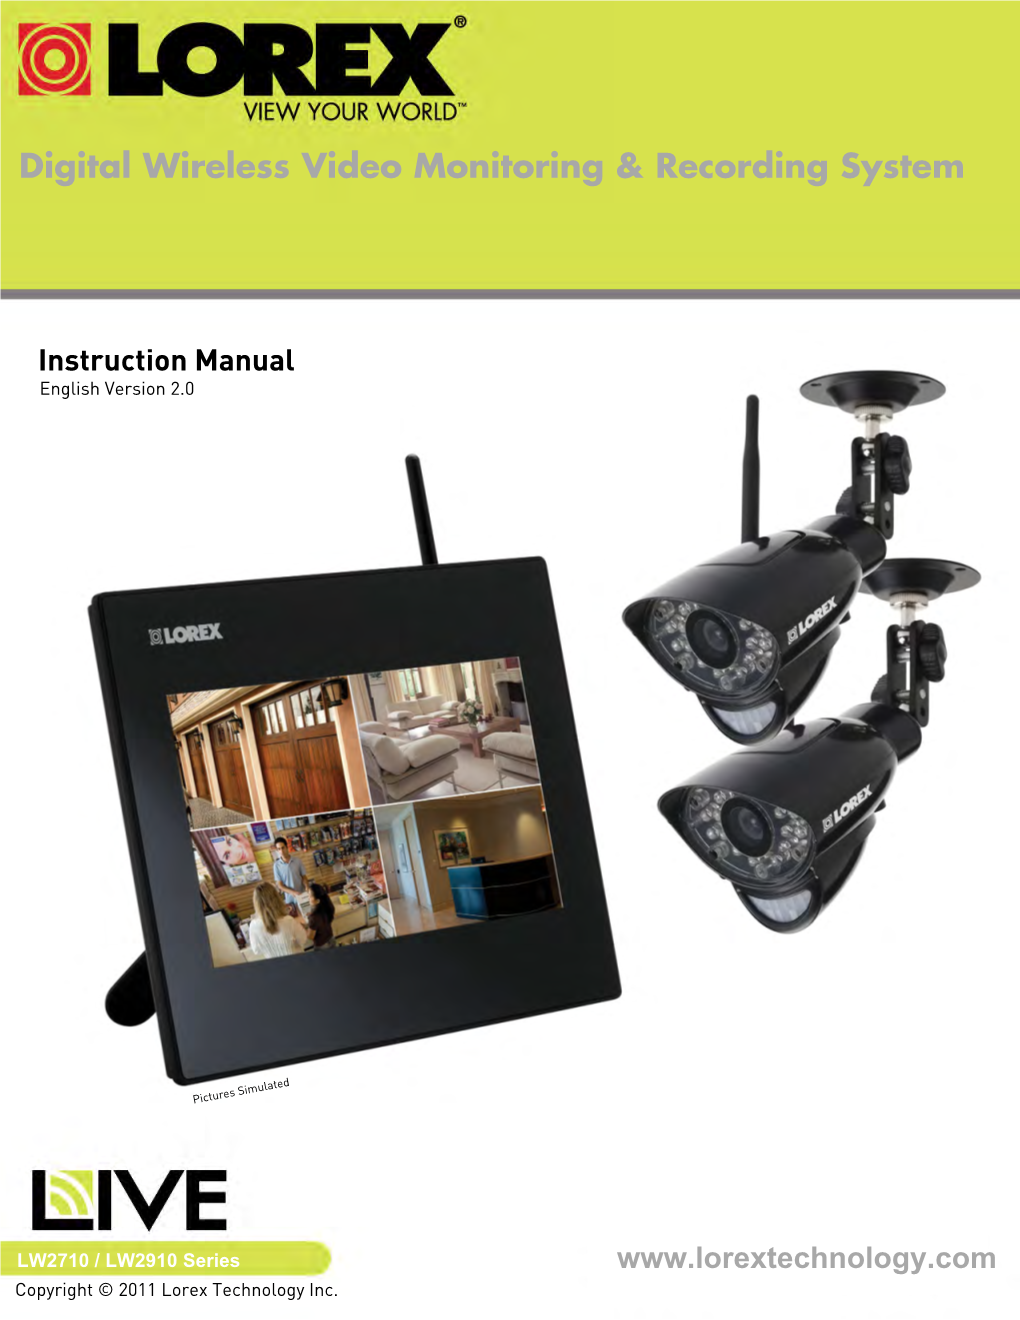 Digital Wireless Video Monitoring & Recording System